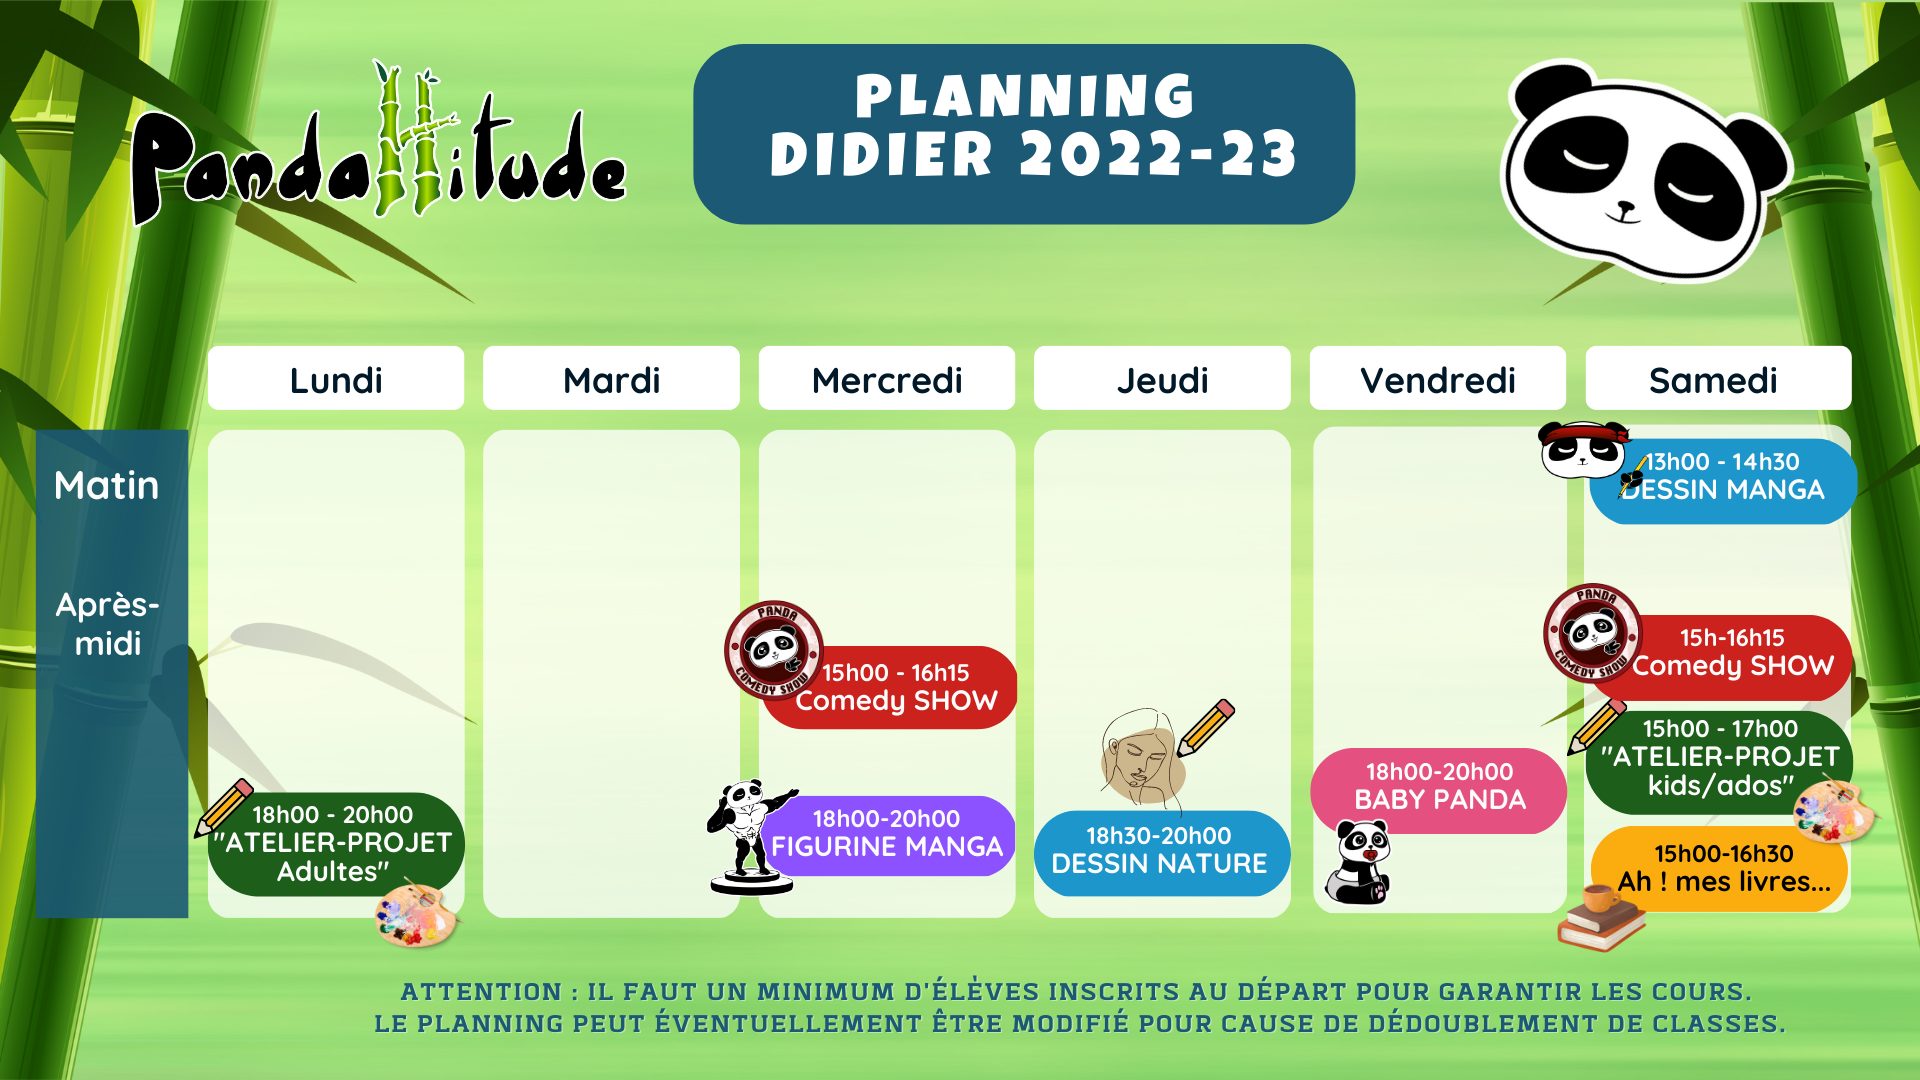 Planning DIDIER 2022-23